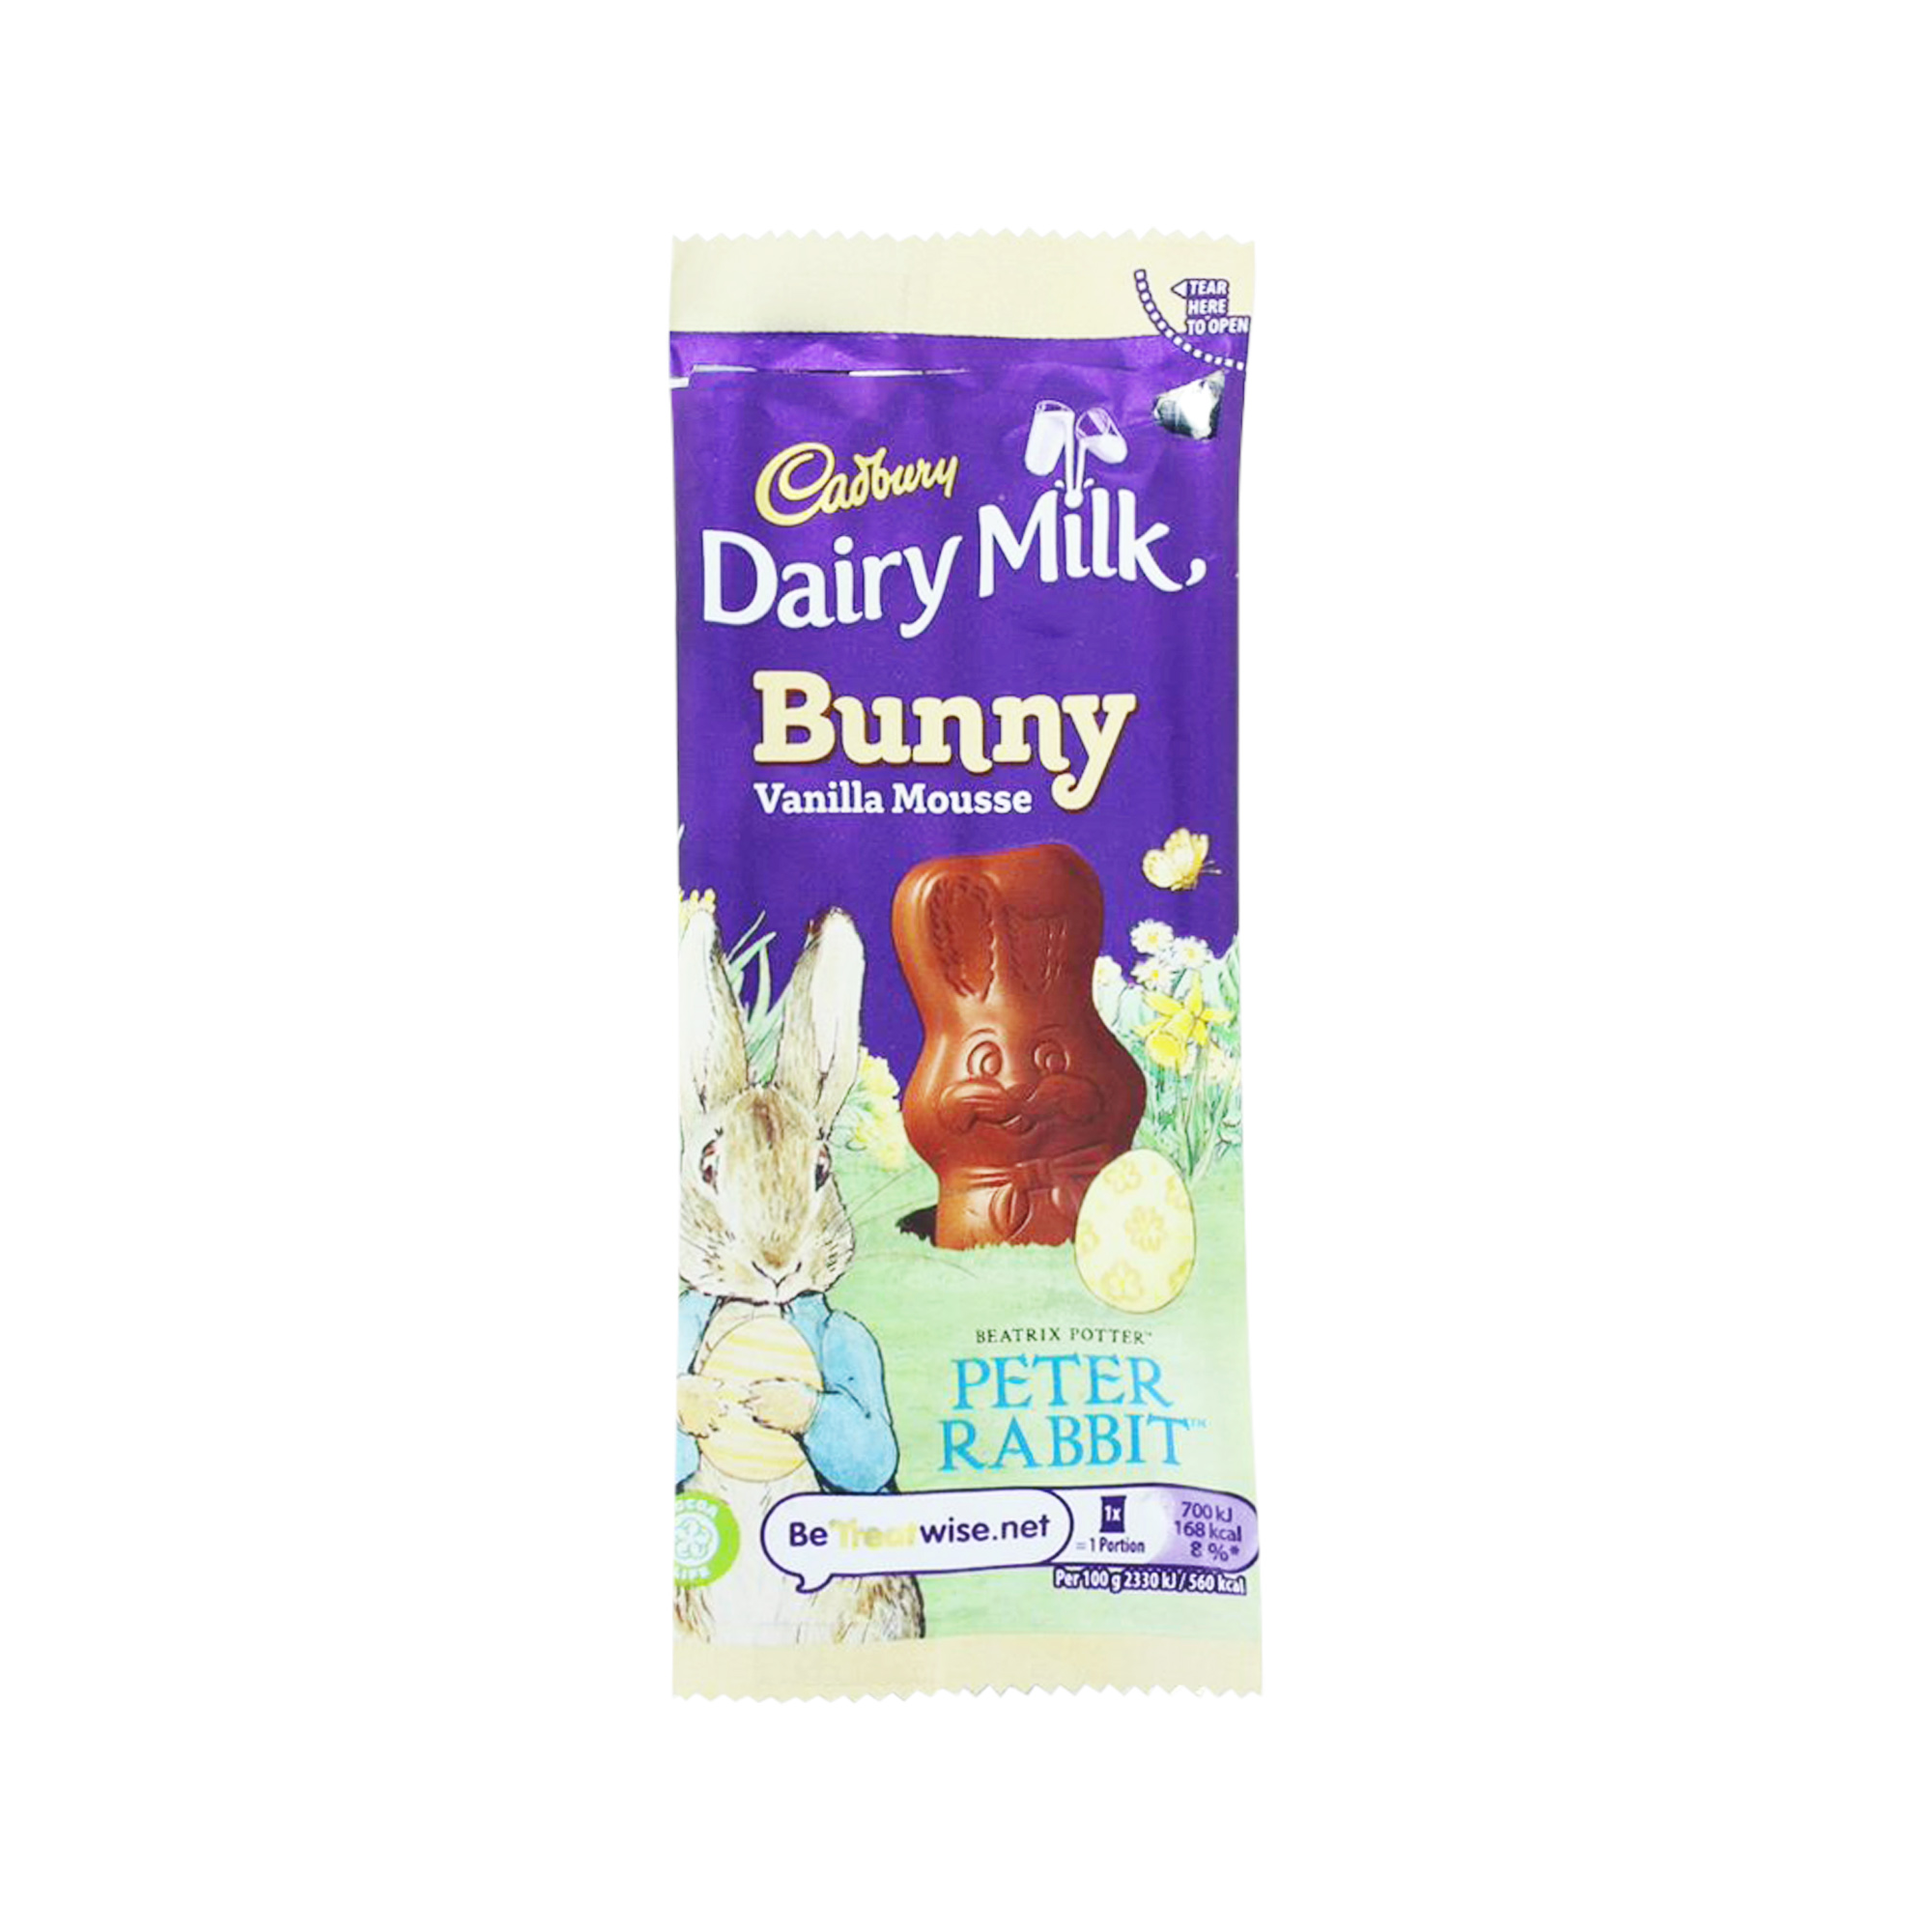 Cadbury Dairy Milk Bunny Vanilla Mousse (30g)